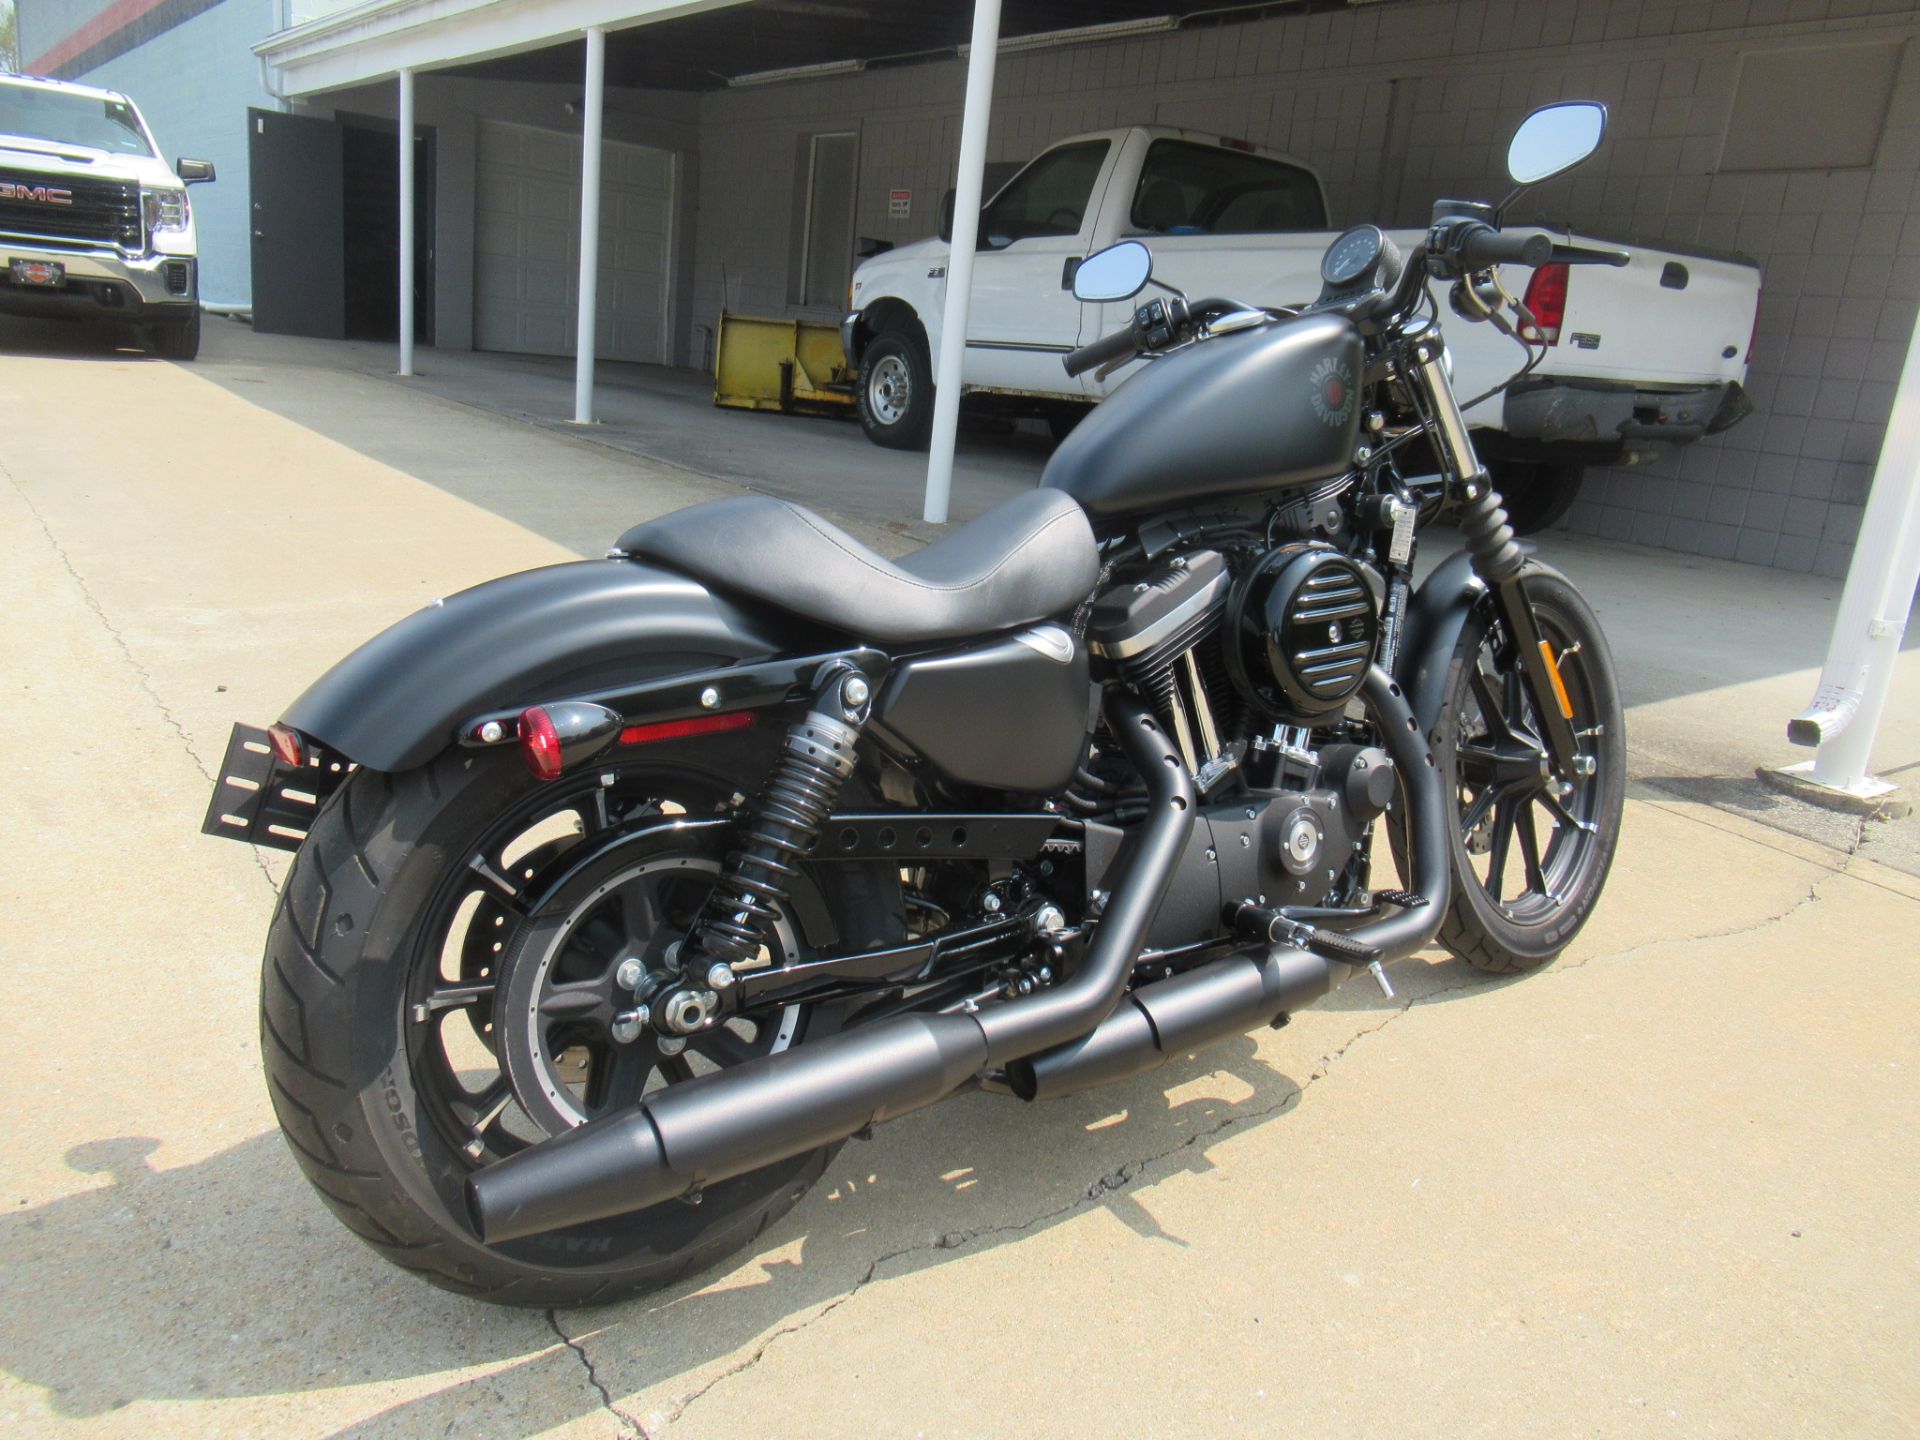 2021 Harley-Davidson Iron 883™ in Springfield, Massachusetts - Photo 3